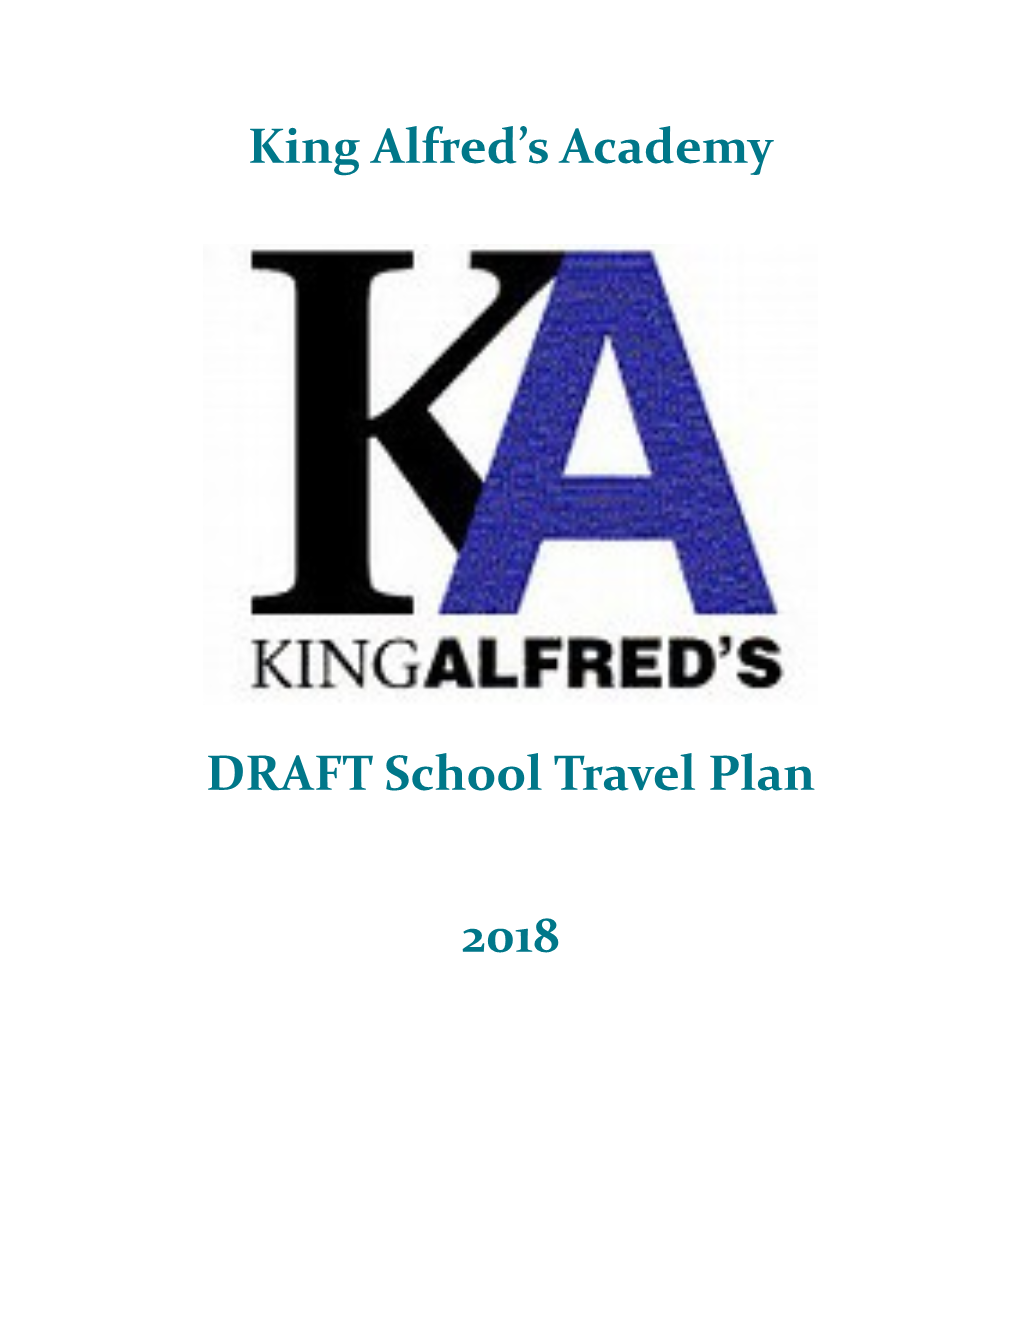 DRAFT School Travel Plan